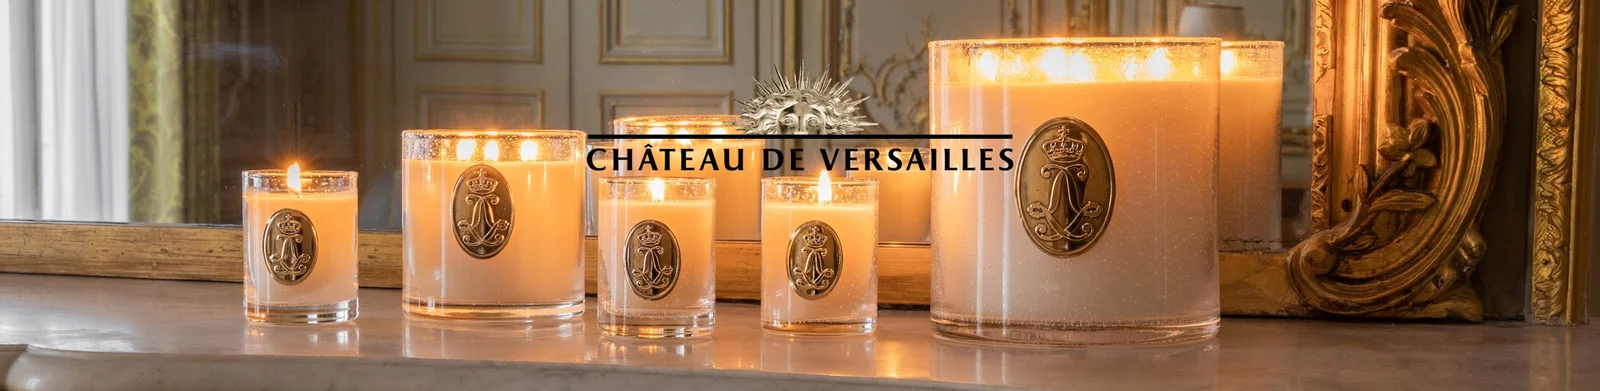 Chateau de Versailles_velkadotextu